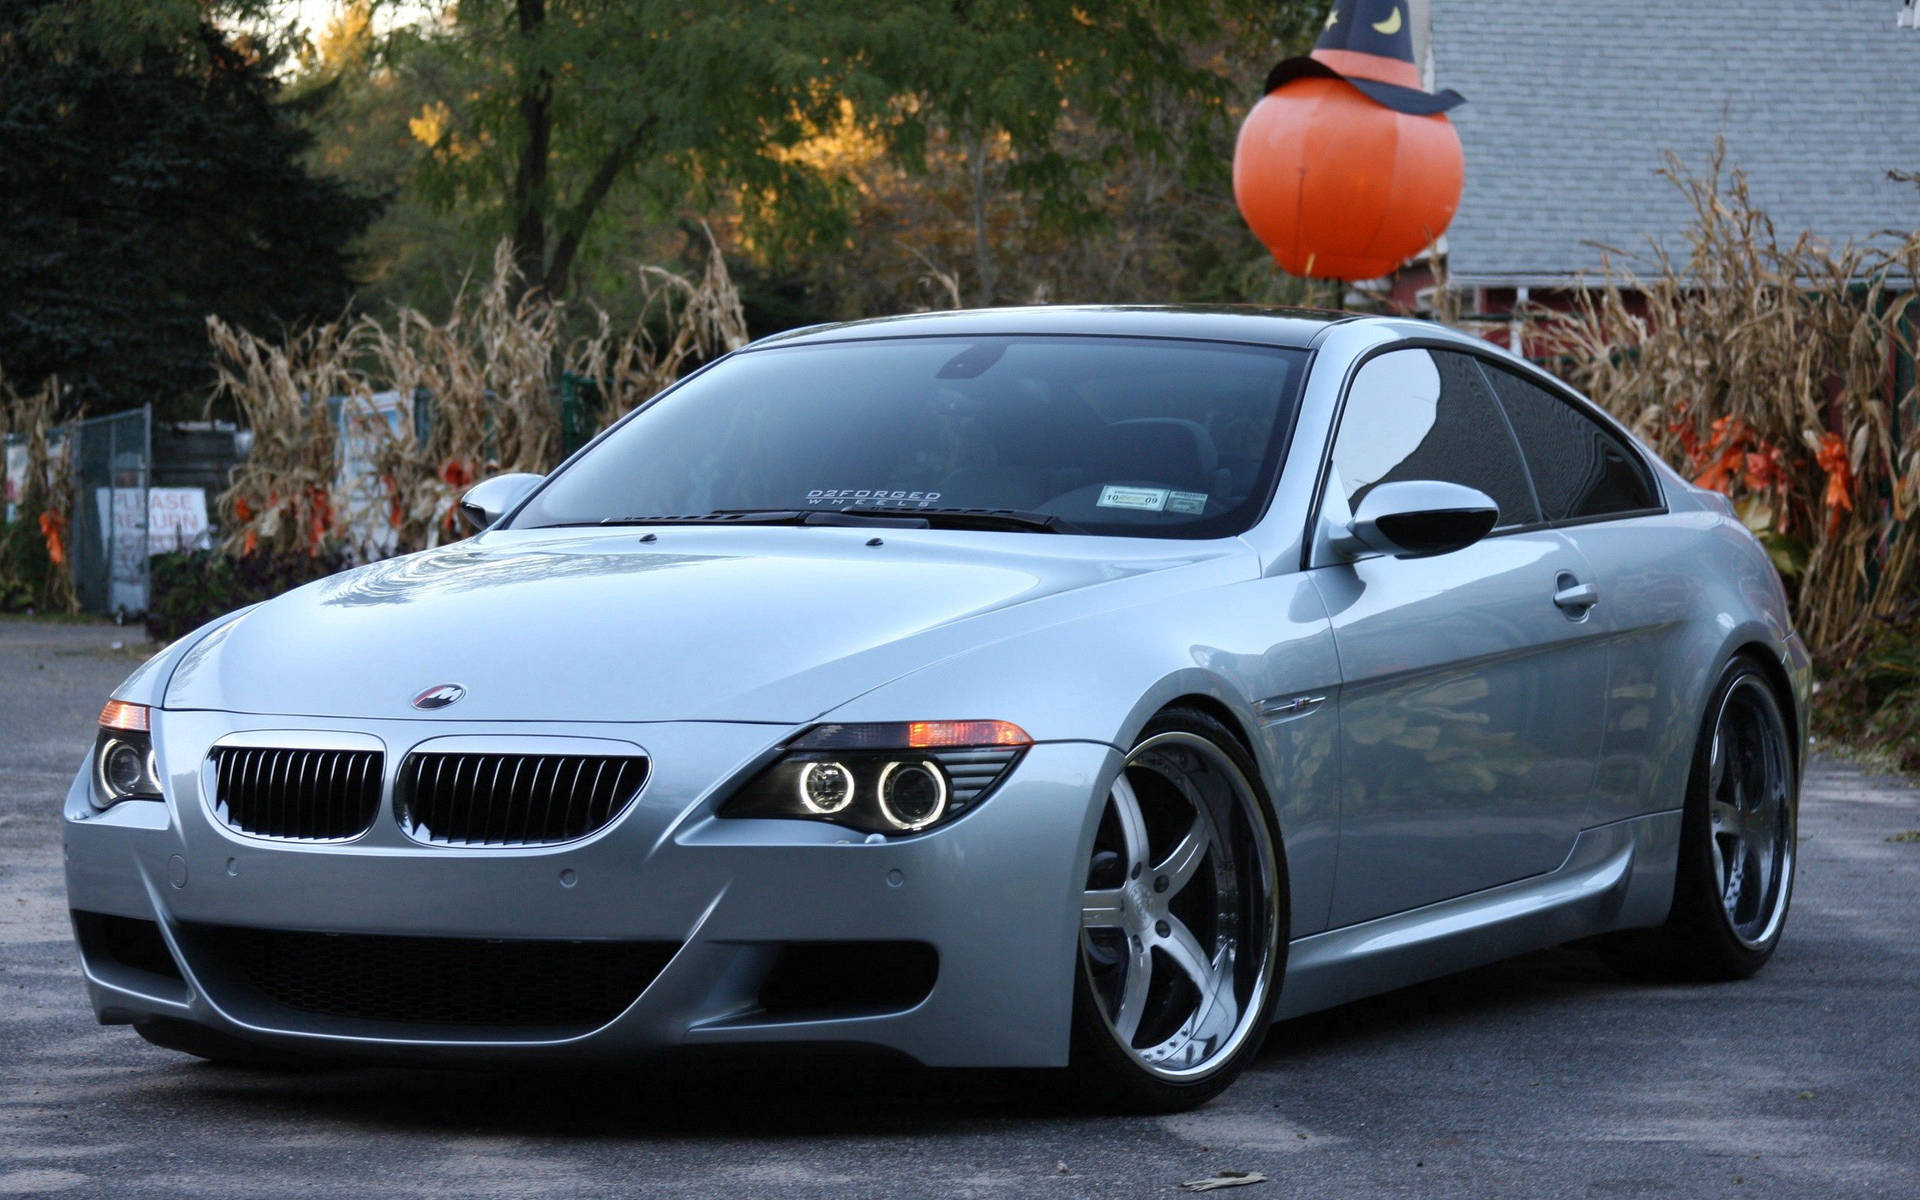 Halloween-ready BMW E63 Wallpaper